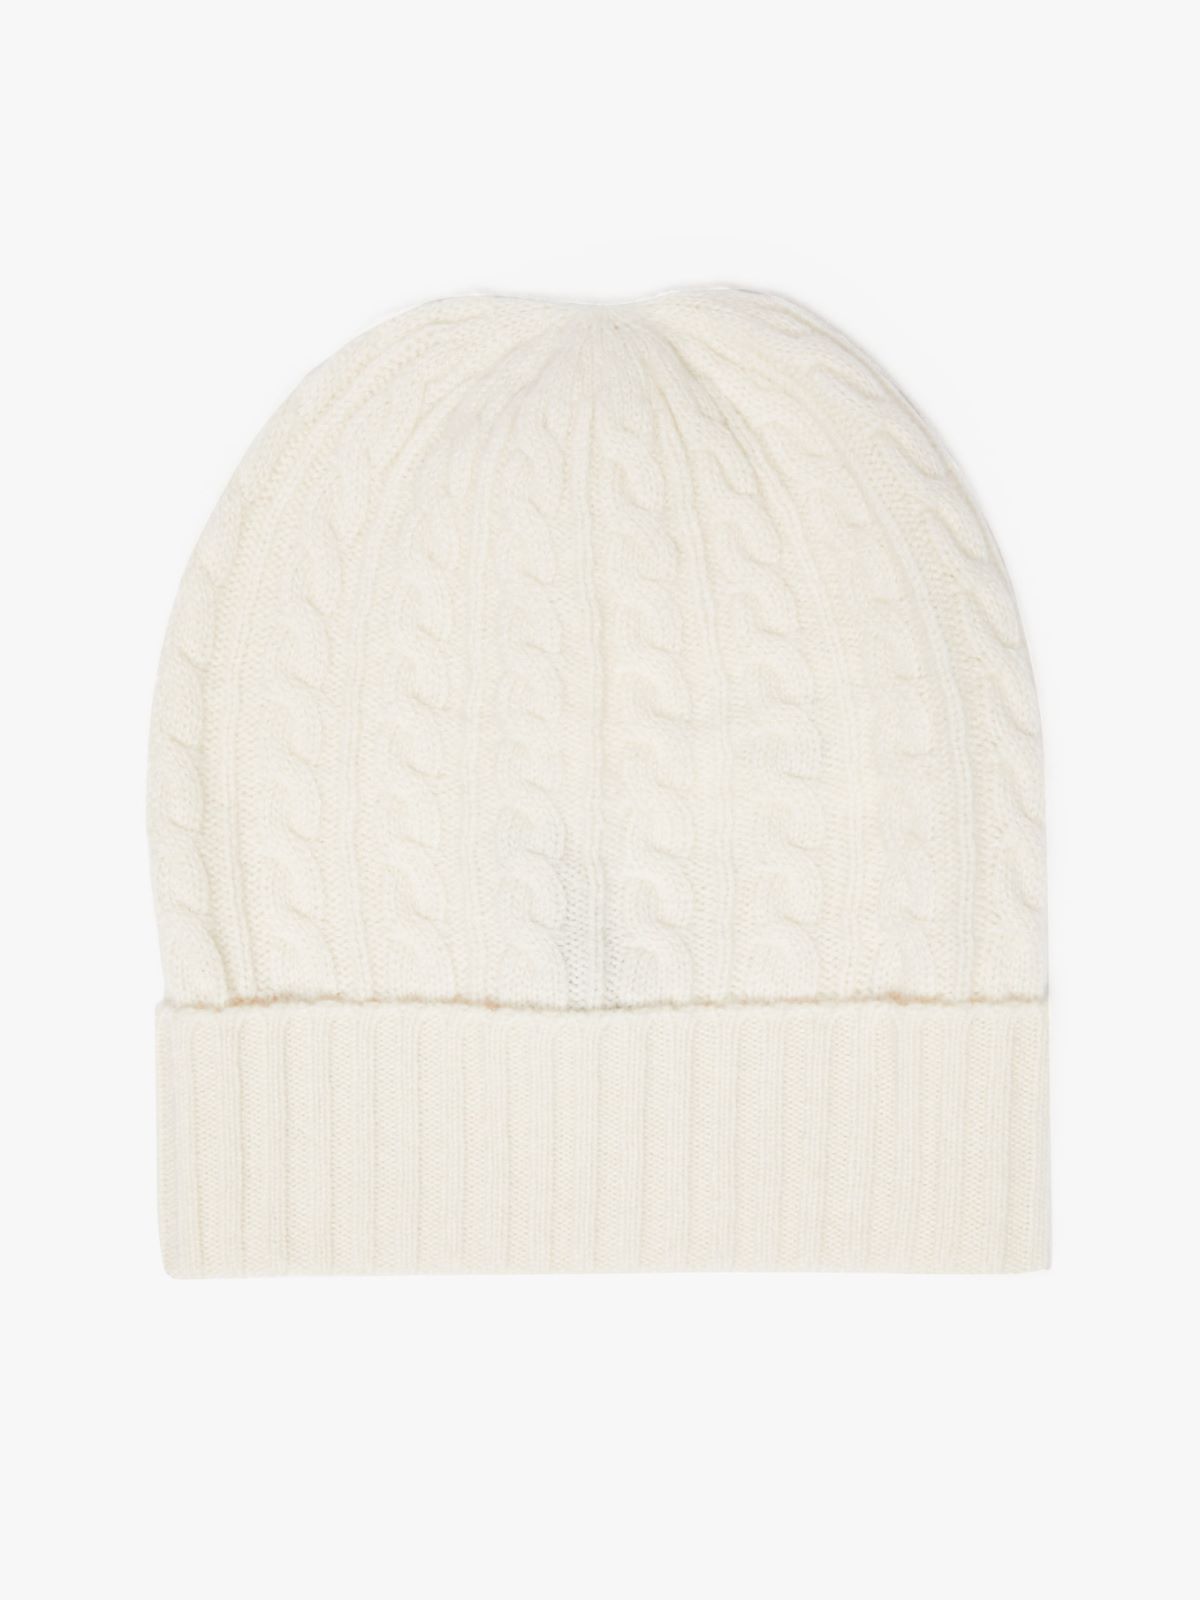 Cashmere hat - WHITE - Weekend Max Mara